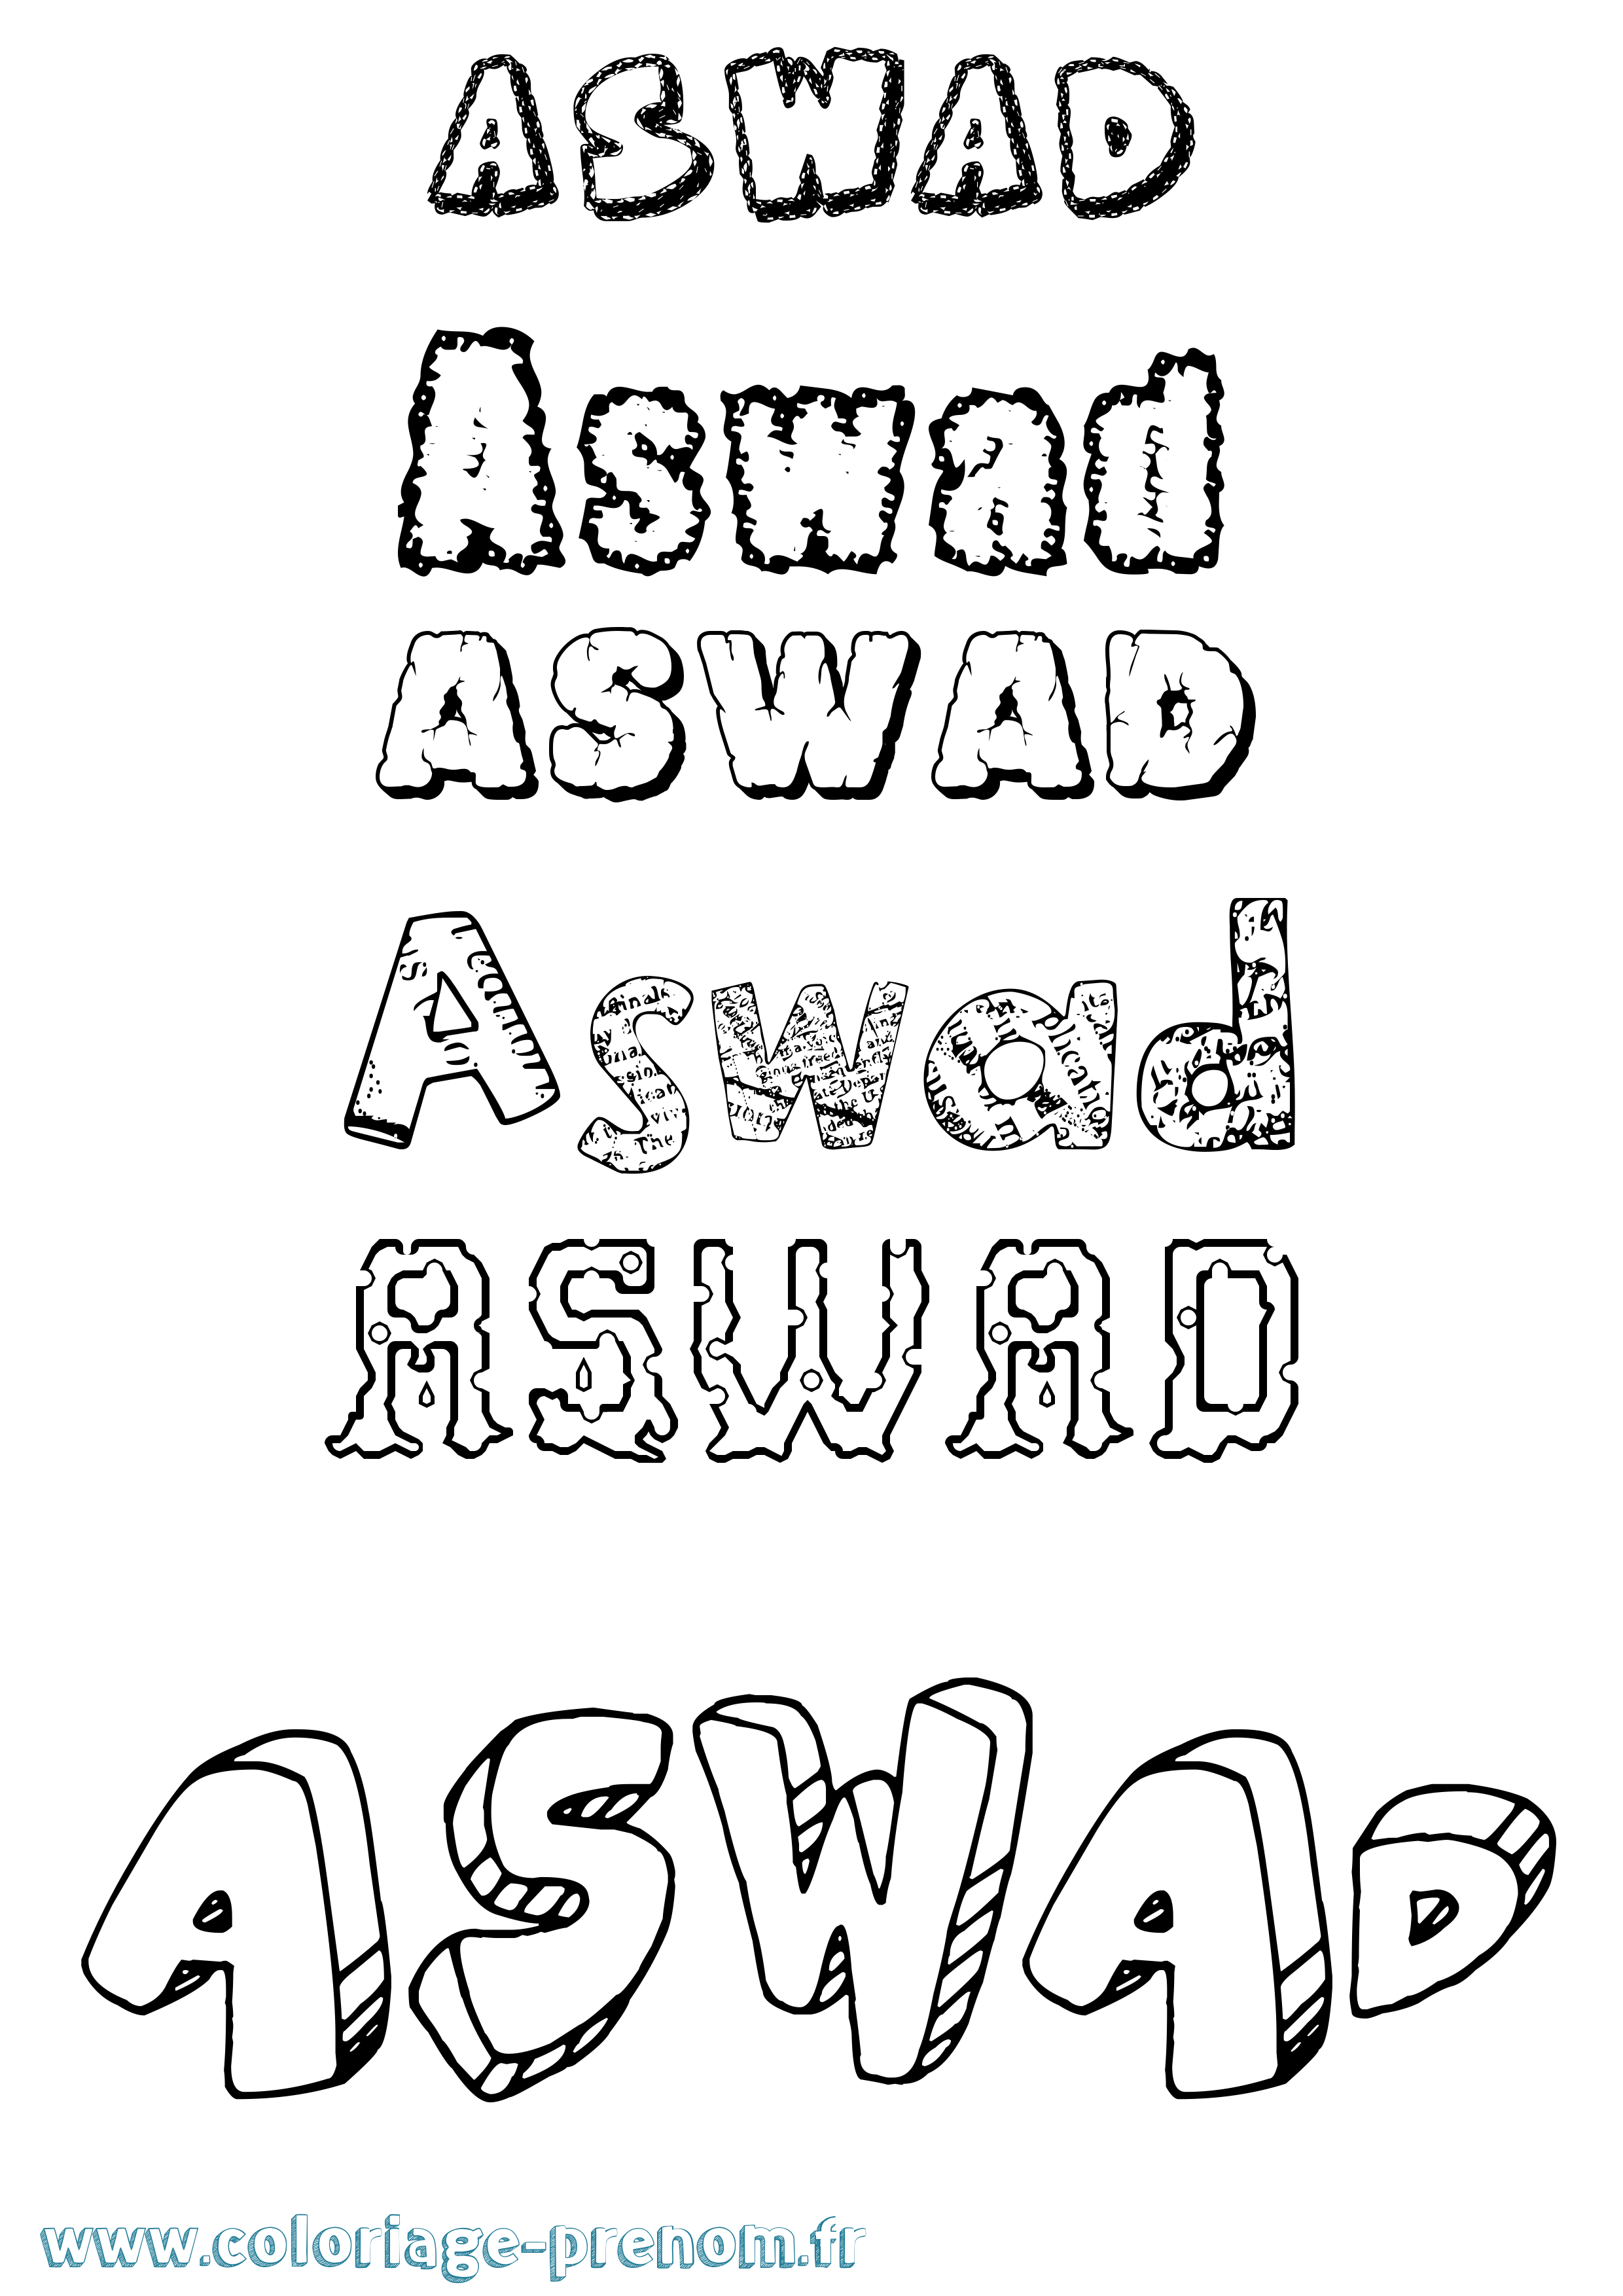 Coloriage prénom Aswad Destructuré